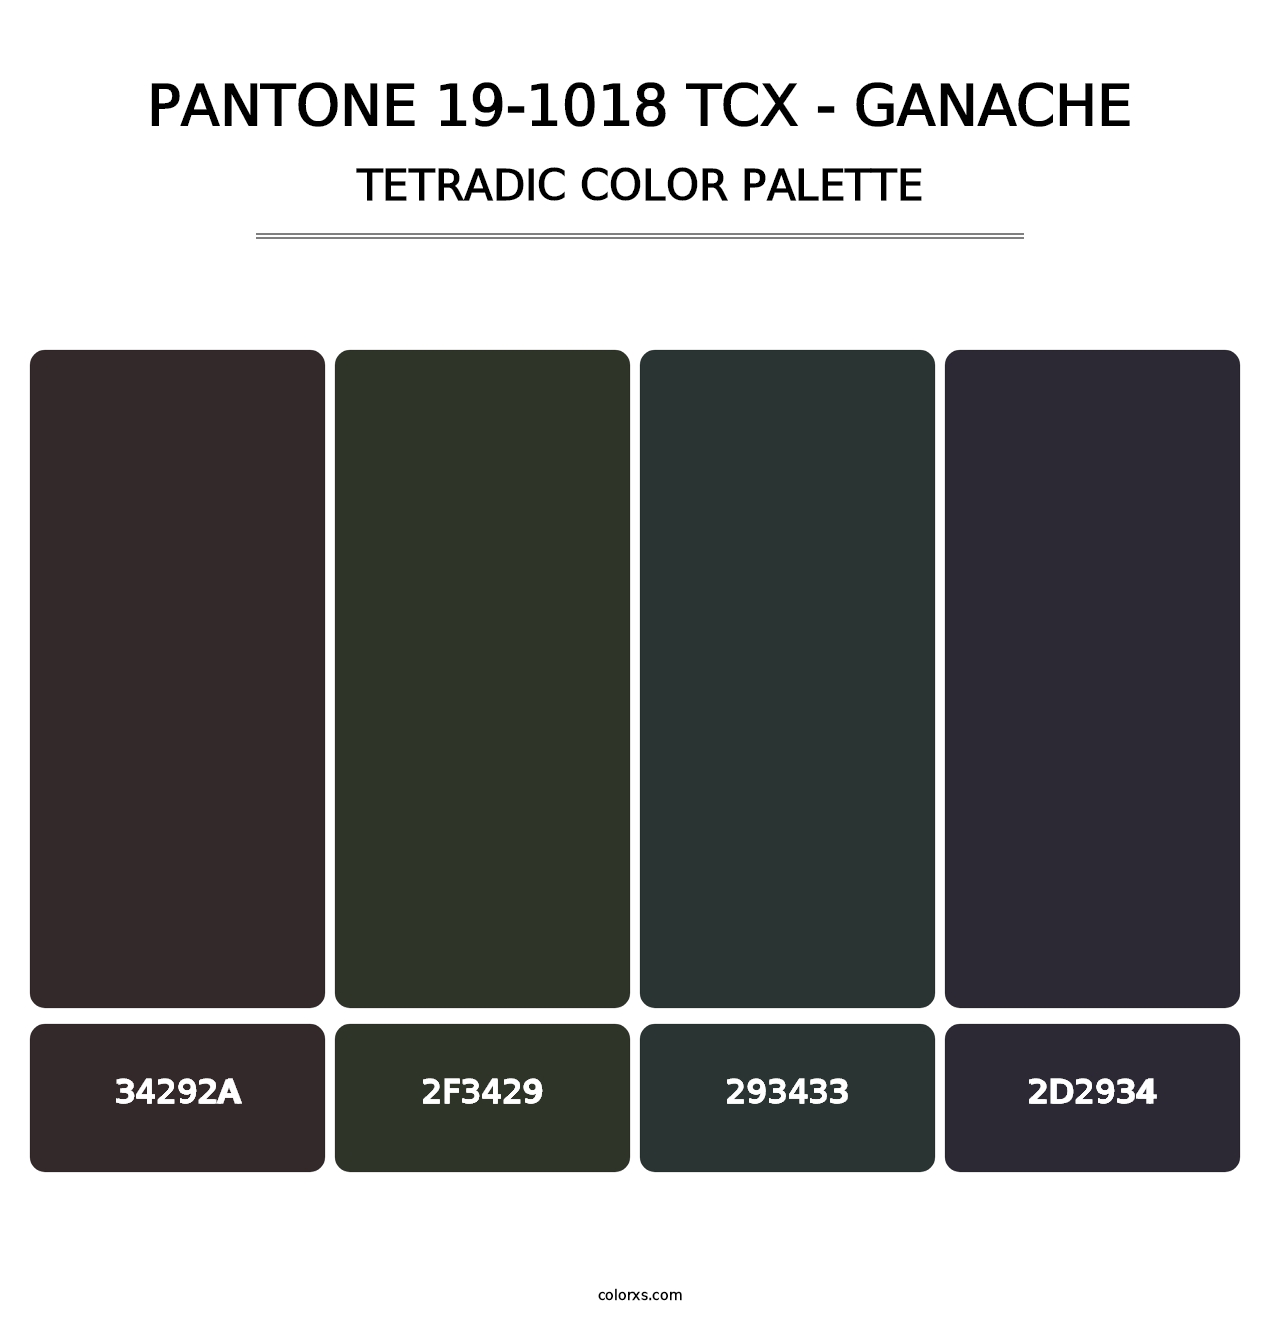 PANTONE 19-1018 TCX - Ganache - Tetradic Color Palette